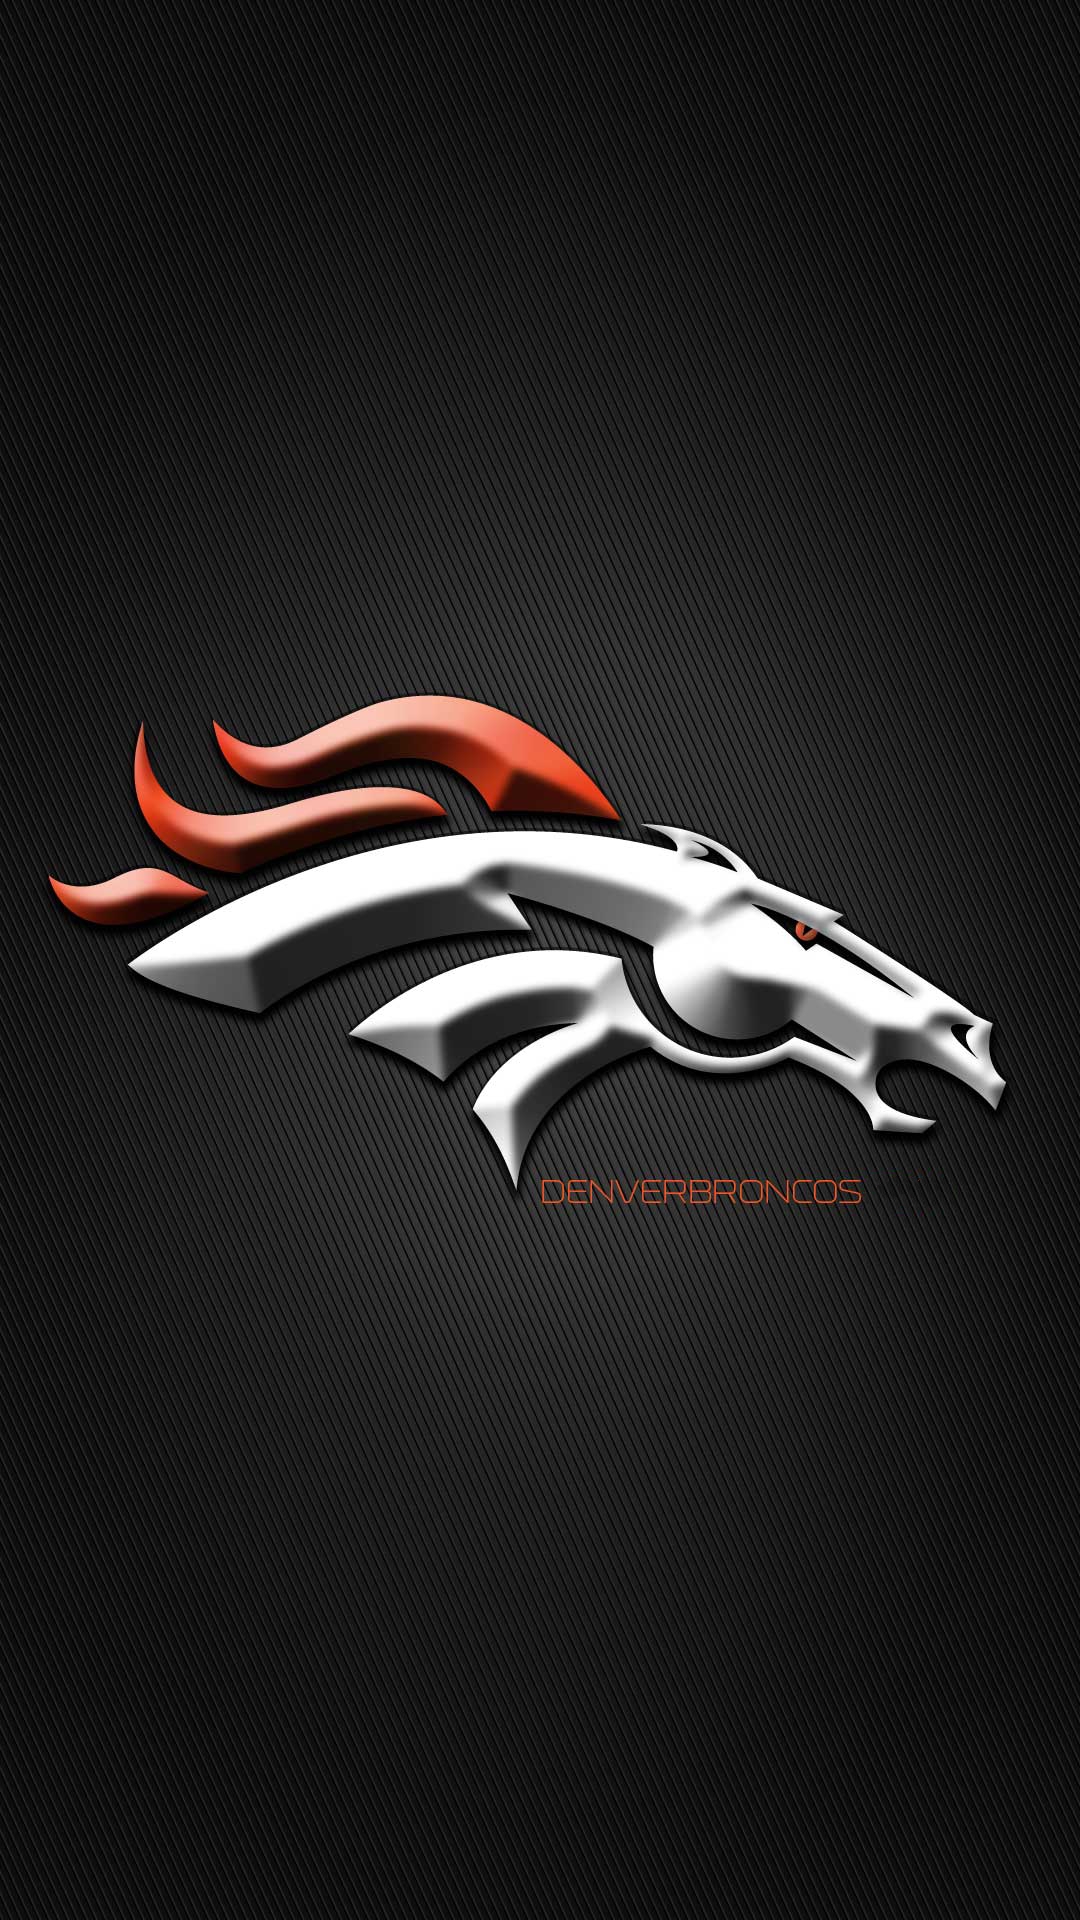 Free Download Denver Broncos iPhone 5 Wallpaper 1080x1920